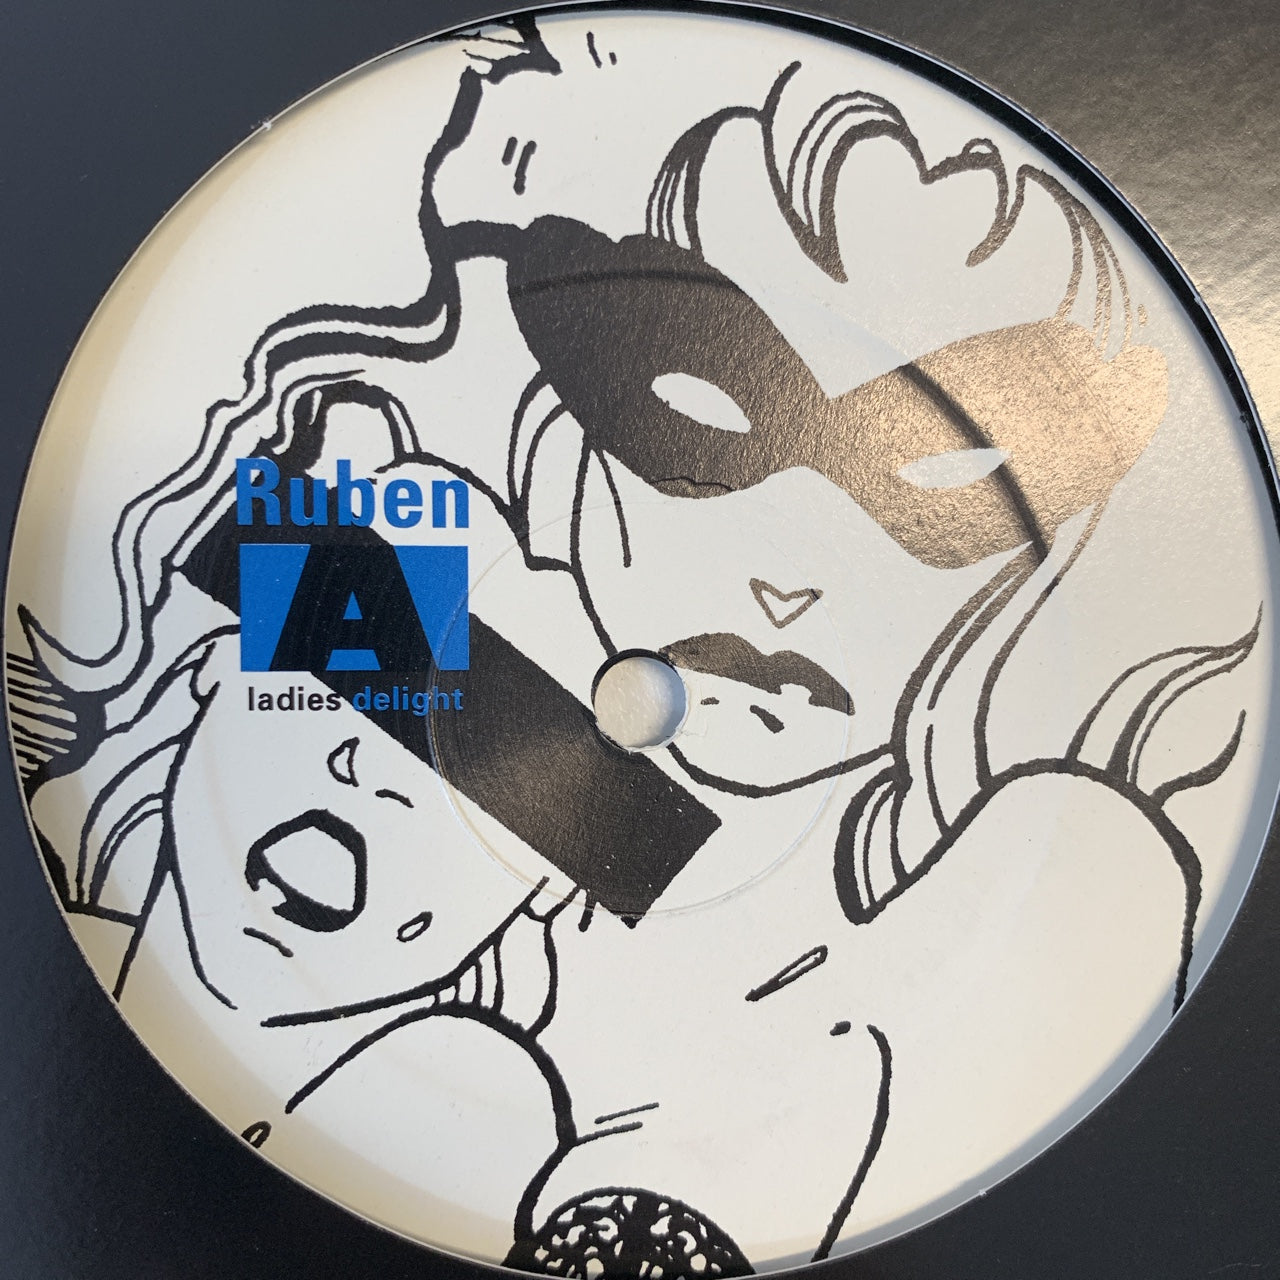 Ruben A ‘Ladies Delight’ ep 4 Track 12inch Vinyl Single on DJAX